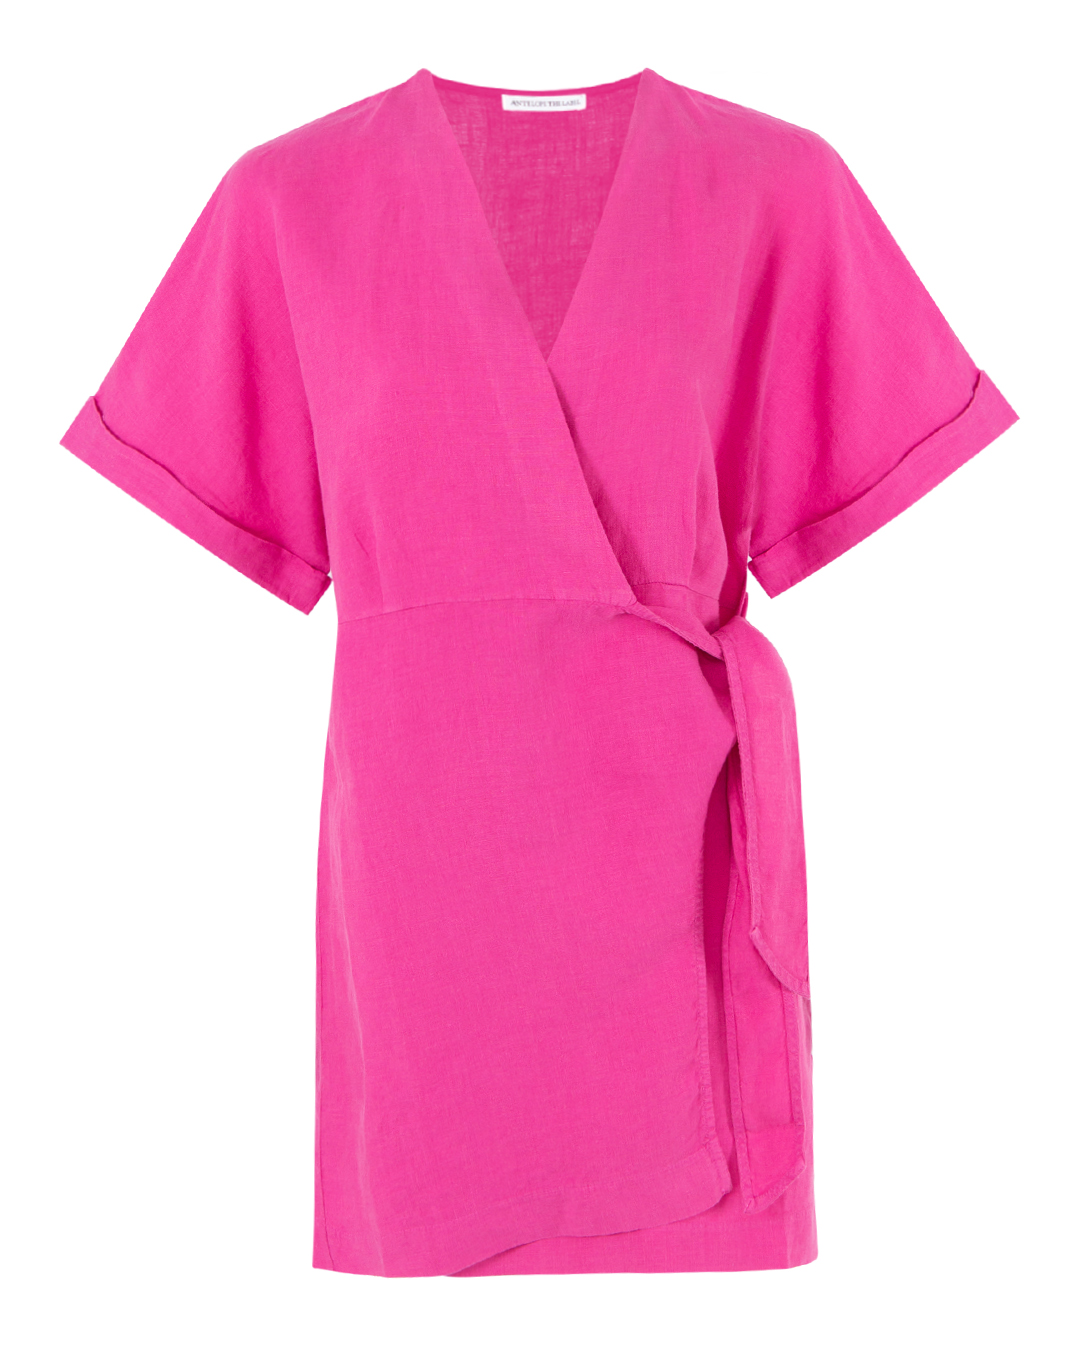 платье ANTELOPE THE LABEL D1.FUKSIA розовый m/l, размер m/l D1.FUKSIA розовый m/l - фото 1